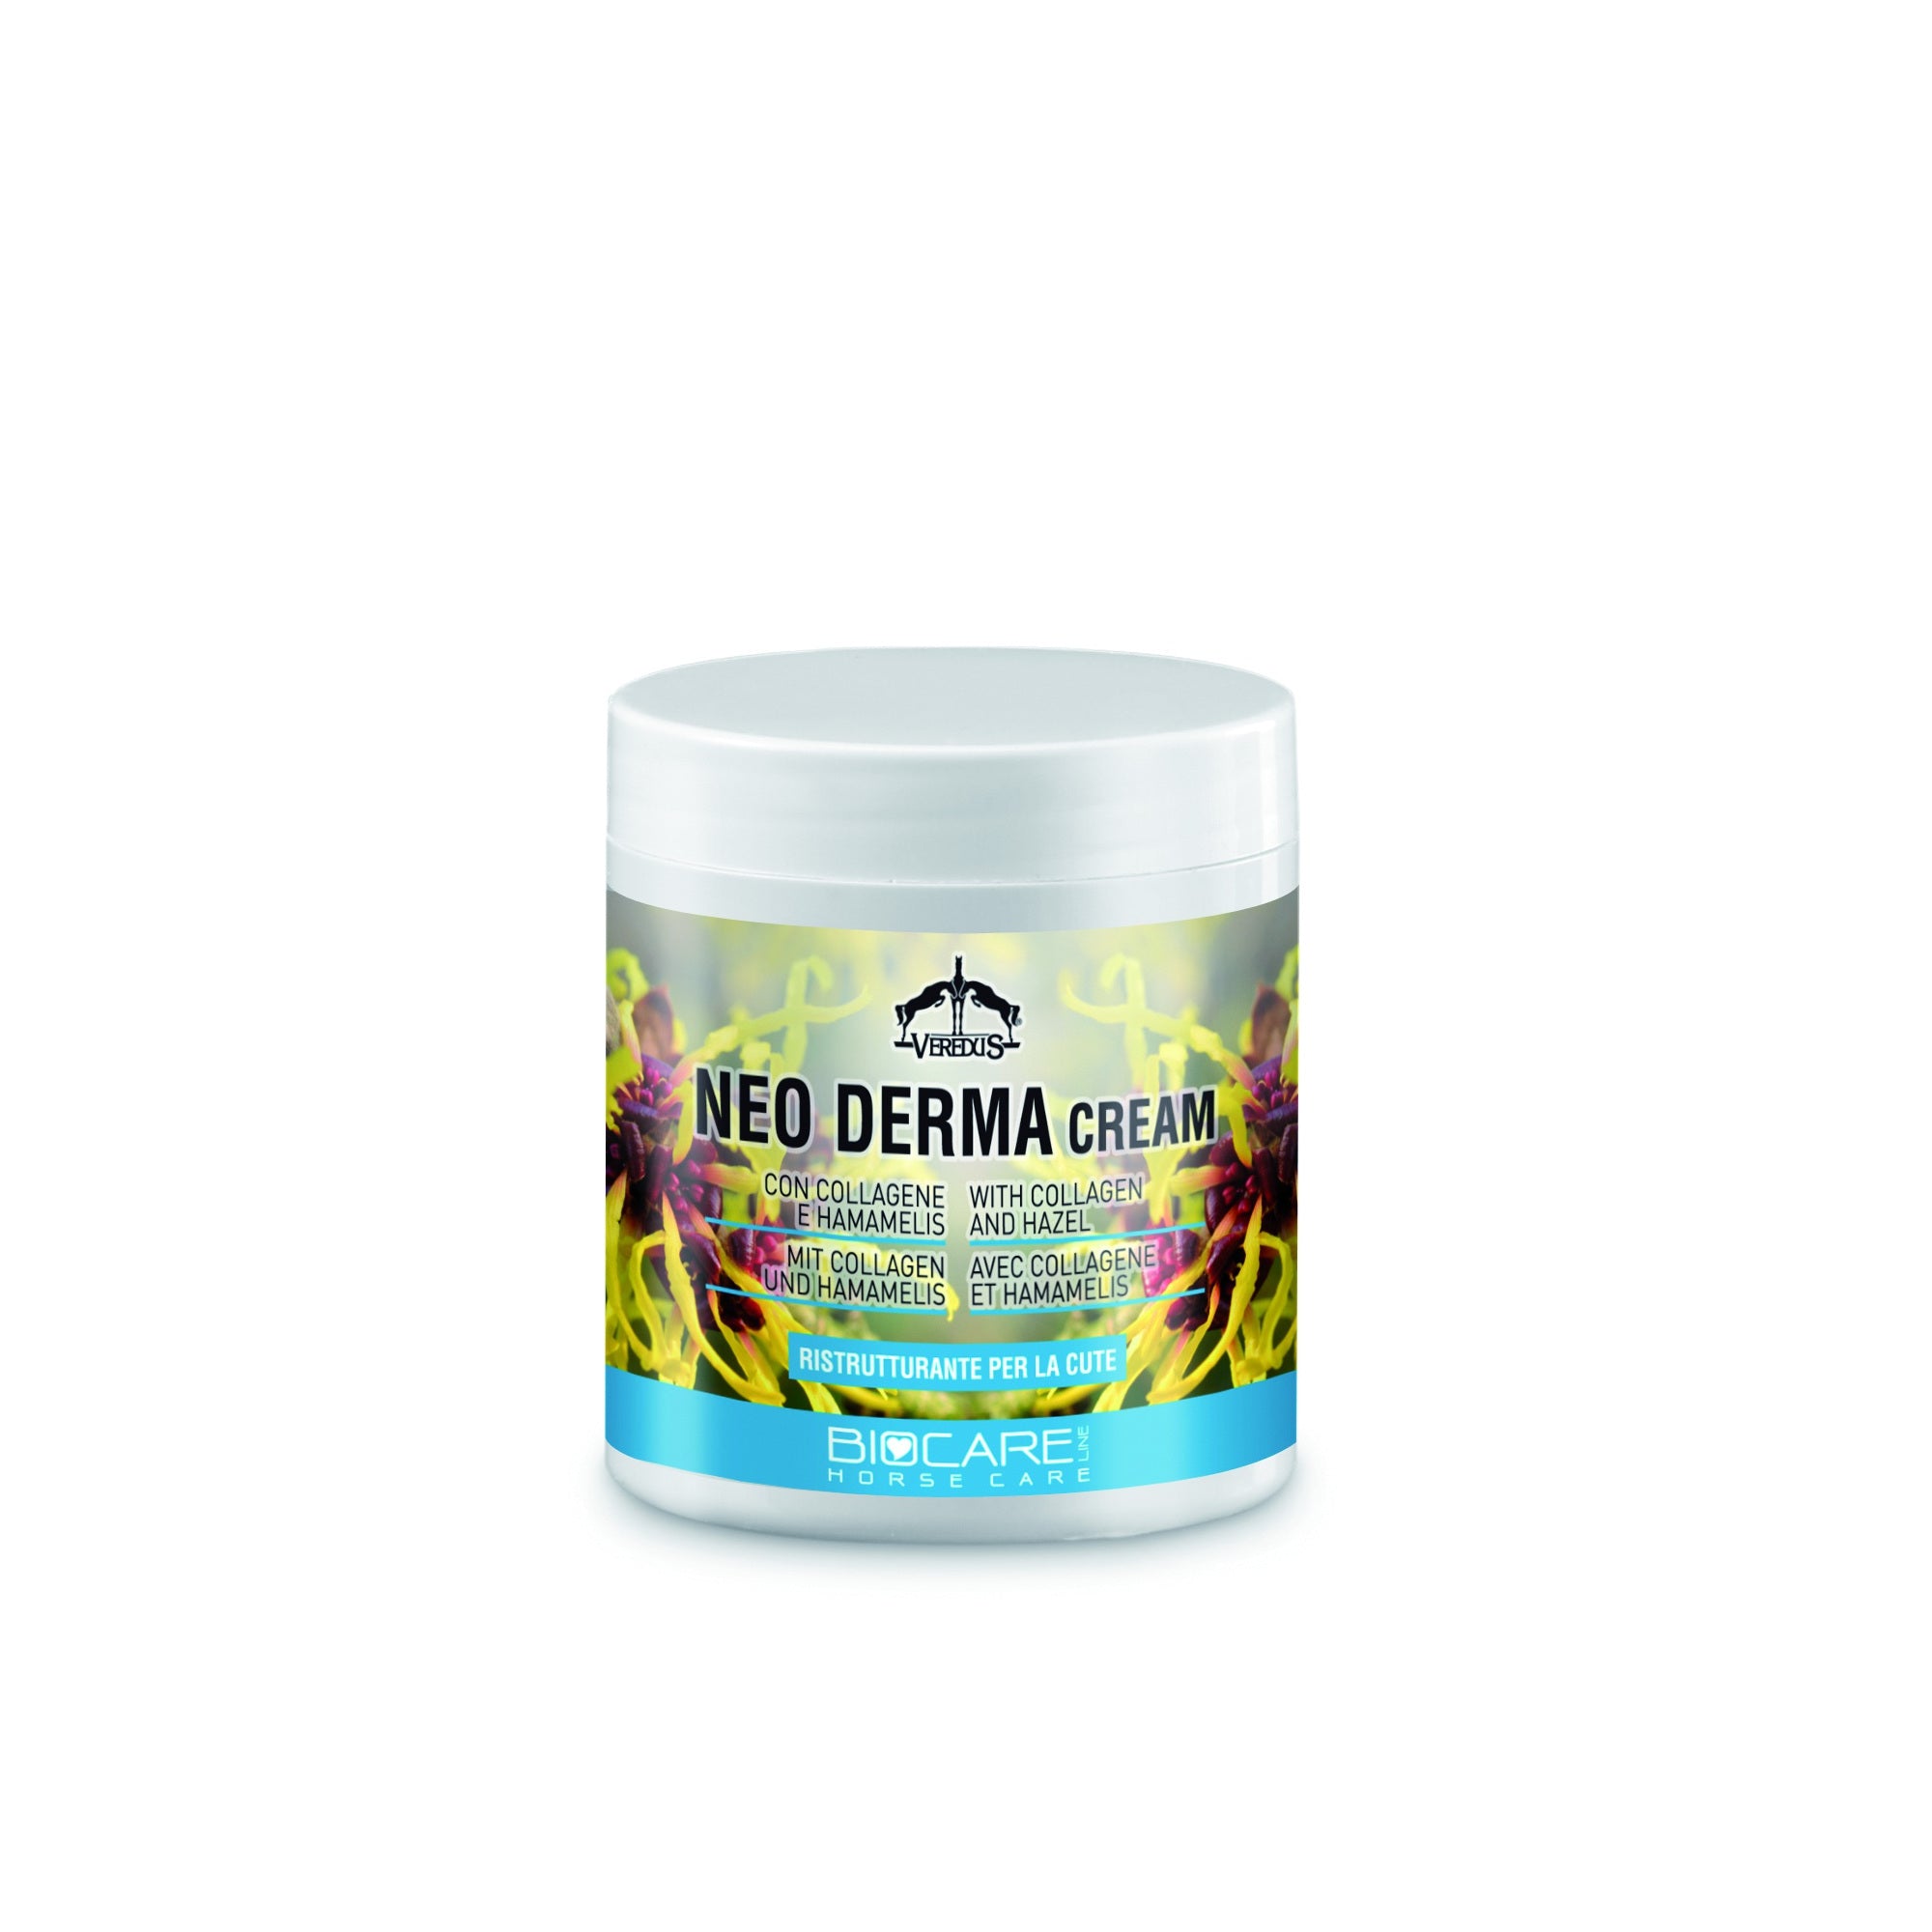 product shot image of the Neo Derma Cream - 250ml